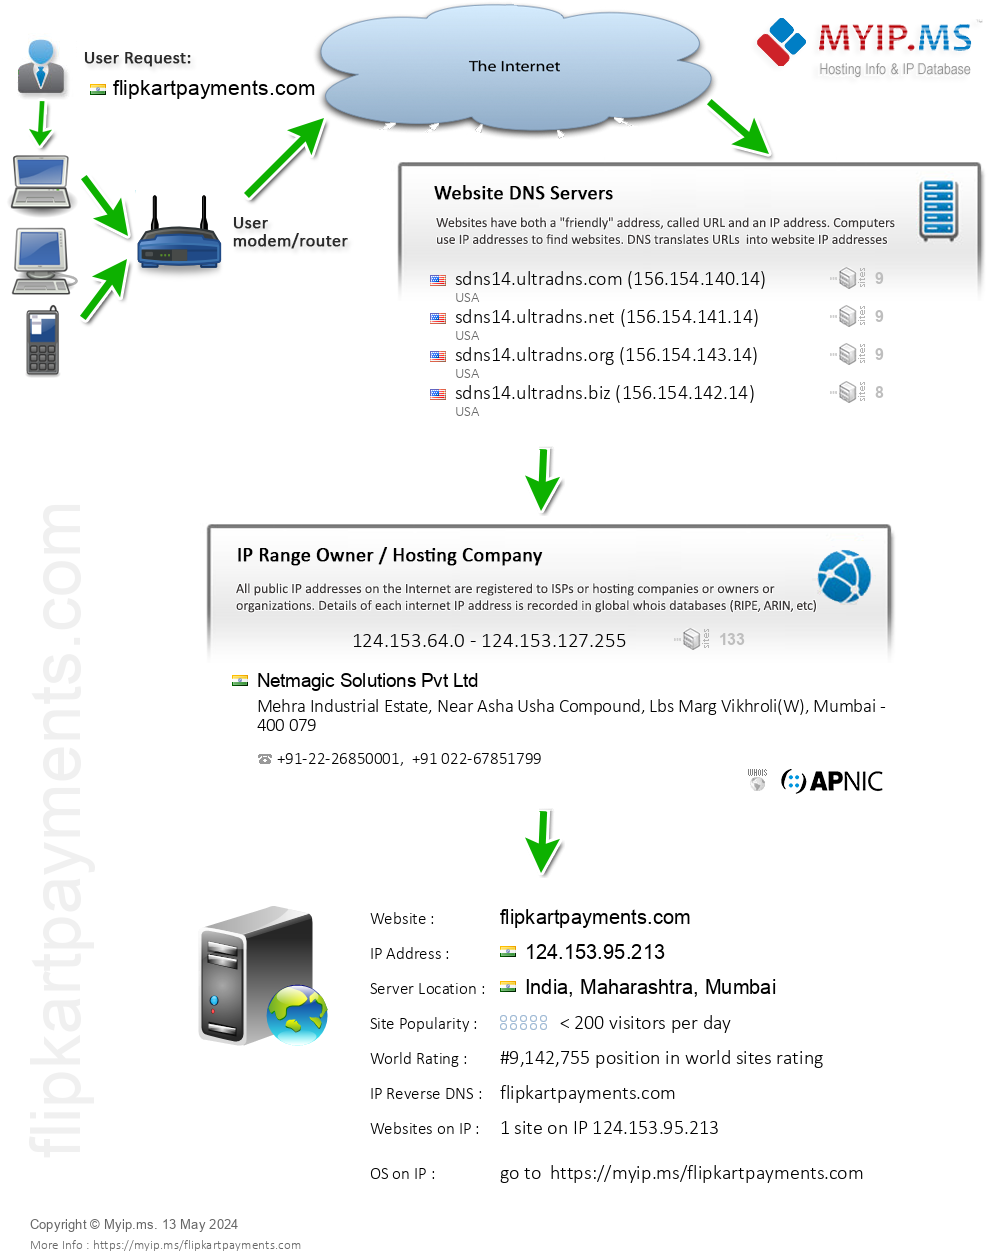 Flipkartpayments.com - Website Hosting Visual IP Diagram